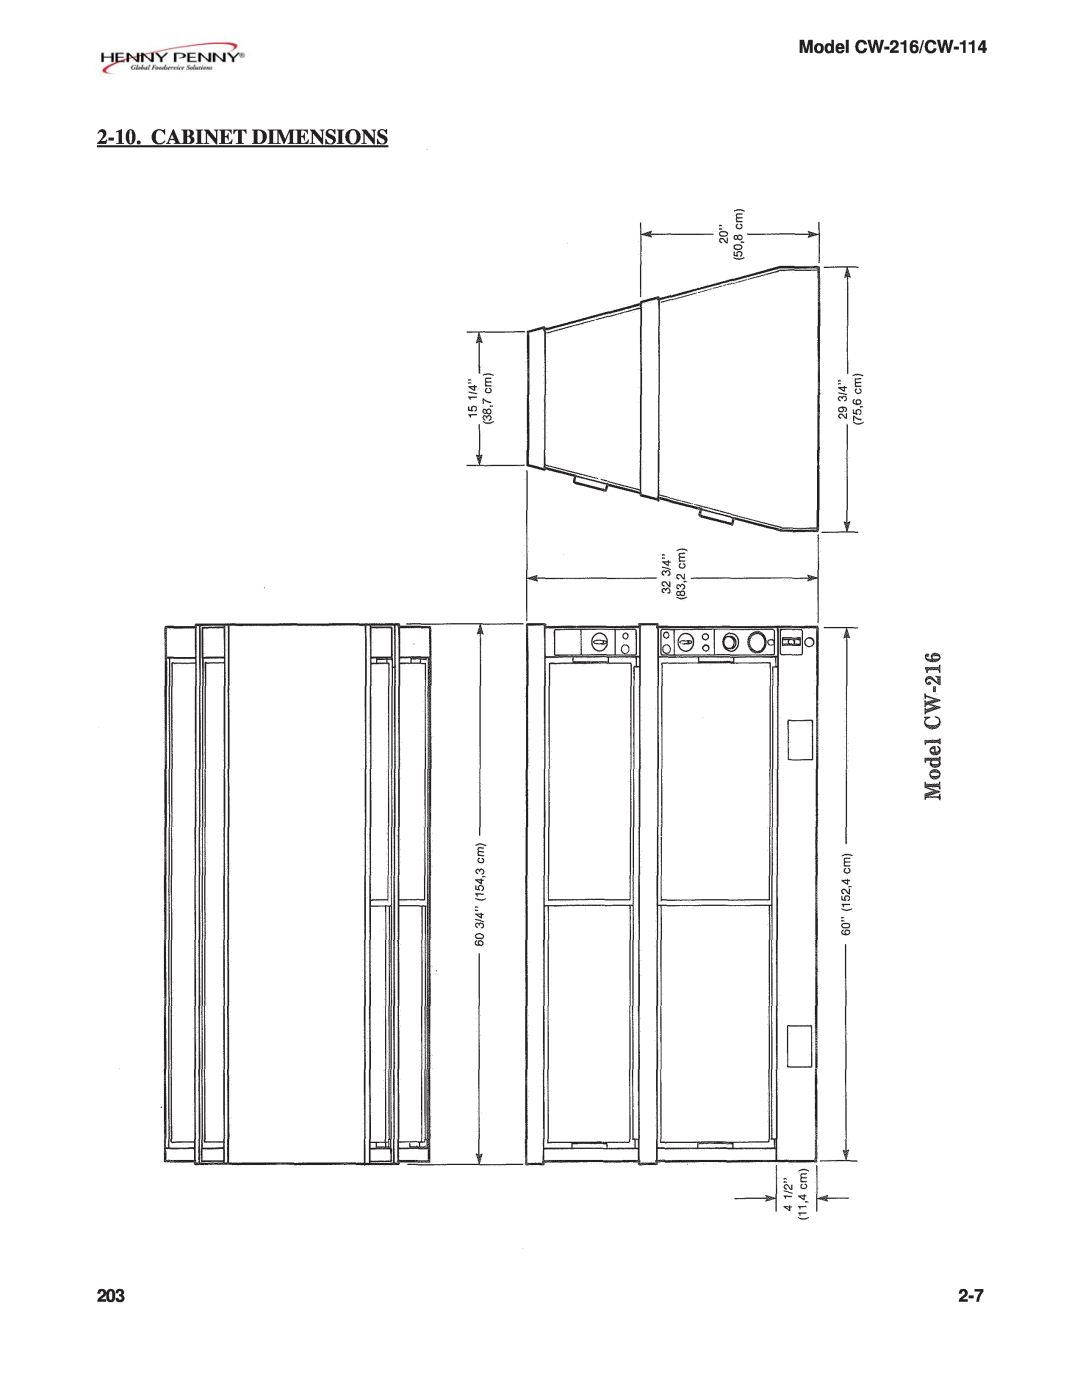 Henny Penny warranty Cabinet Dimensions, Model CW-216/CW-114 